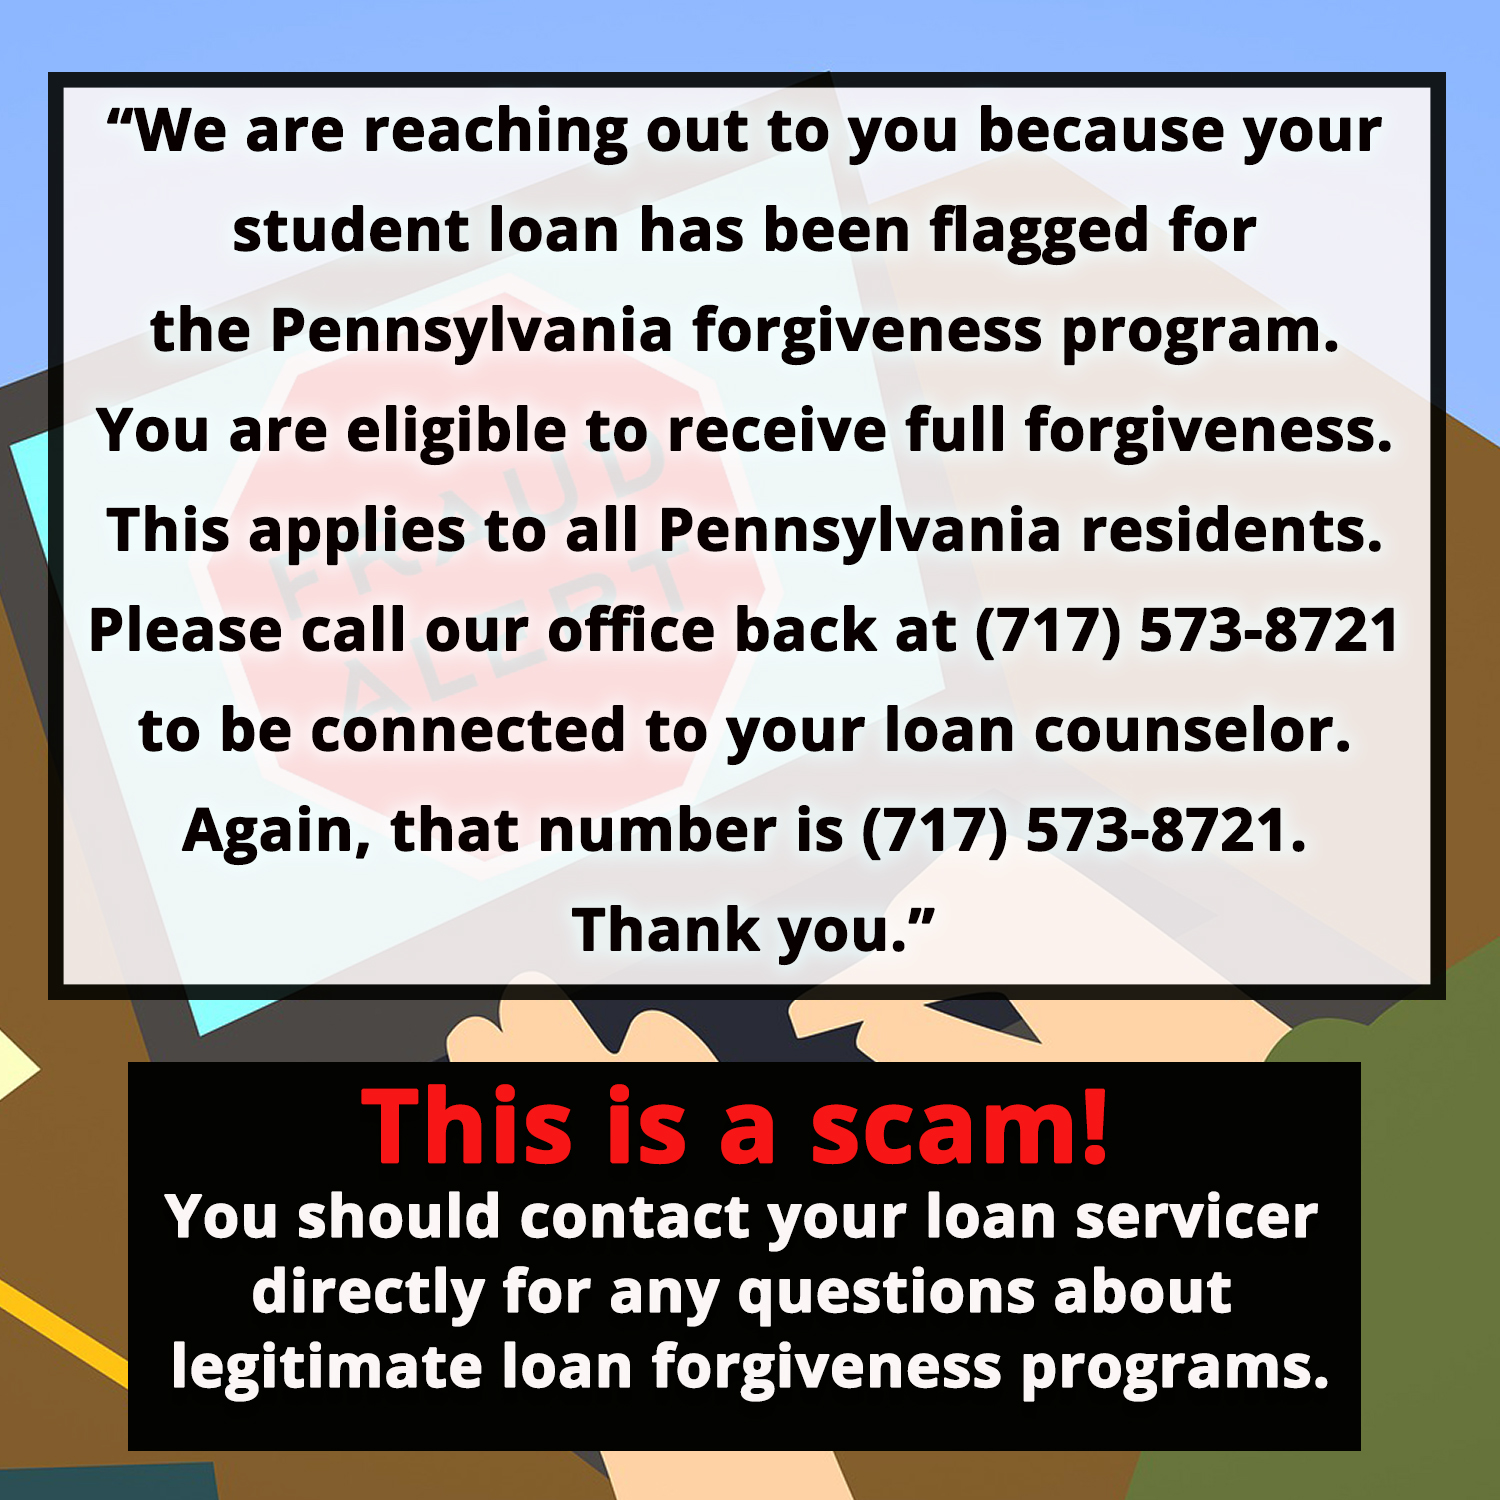 Contact your loan servicer regarding repayment or forgiveness programs.